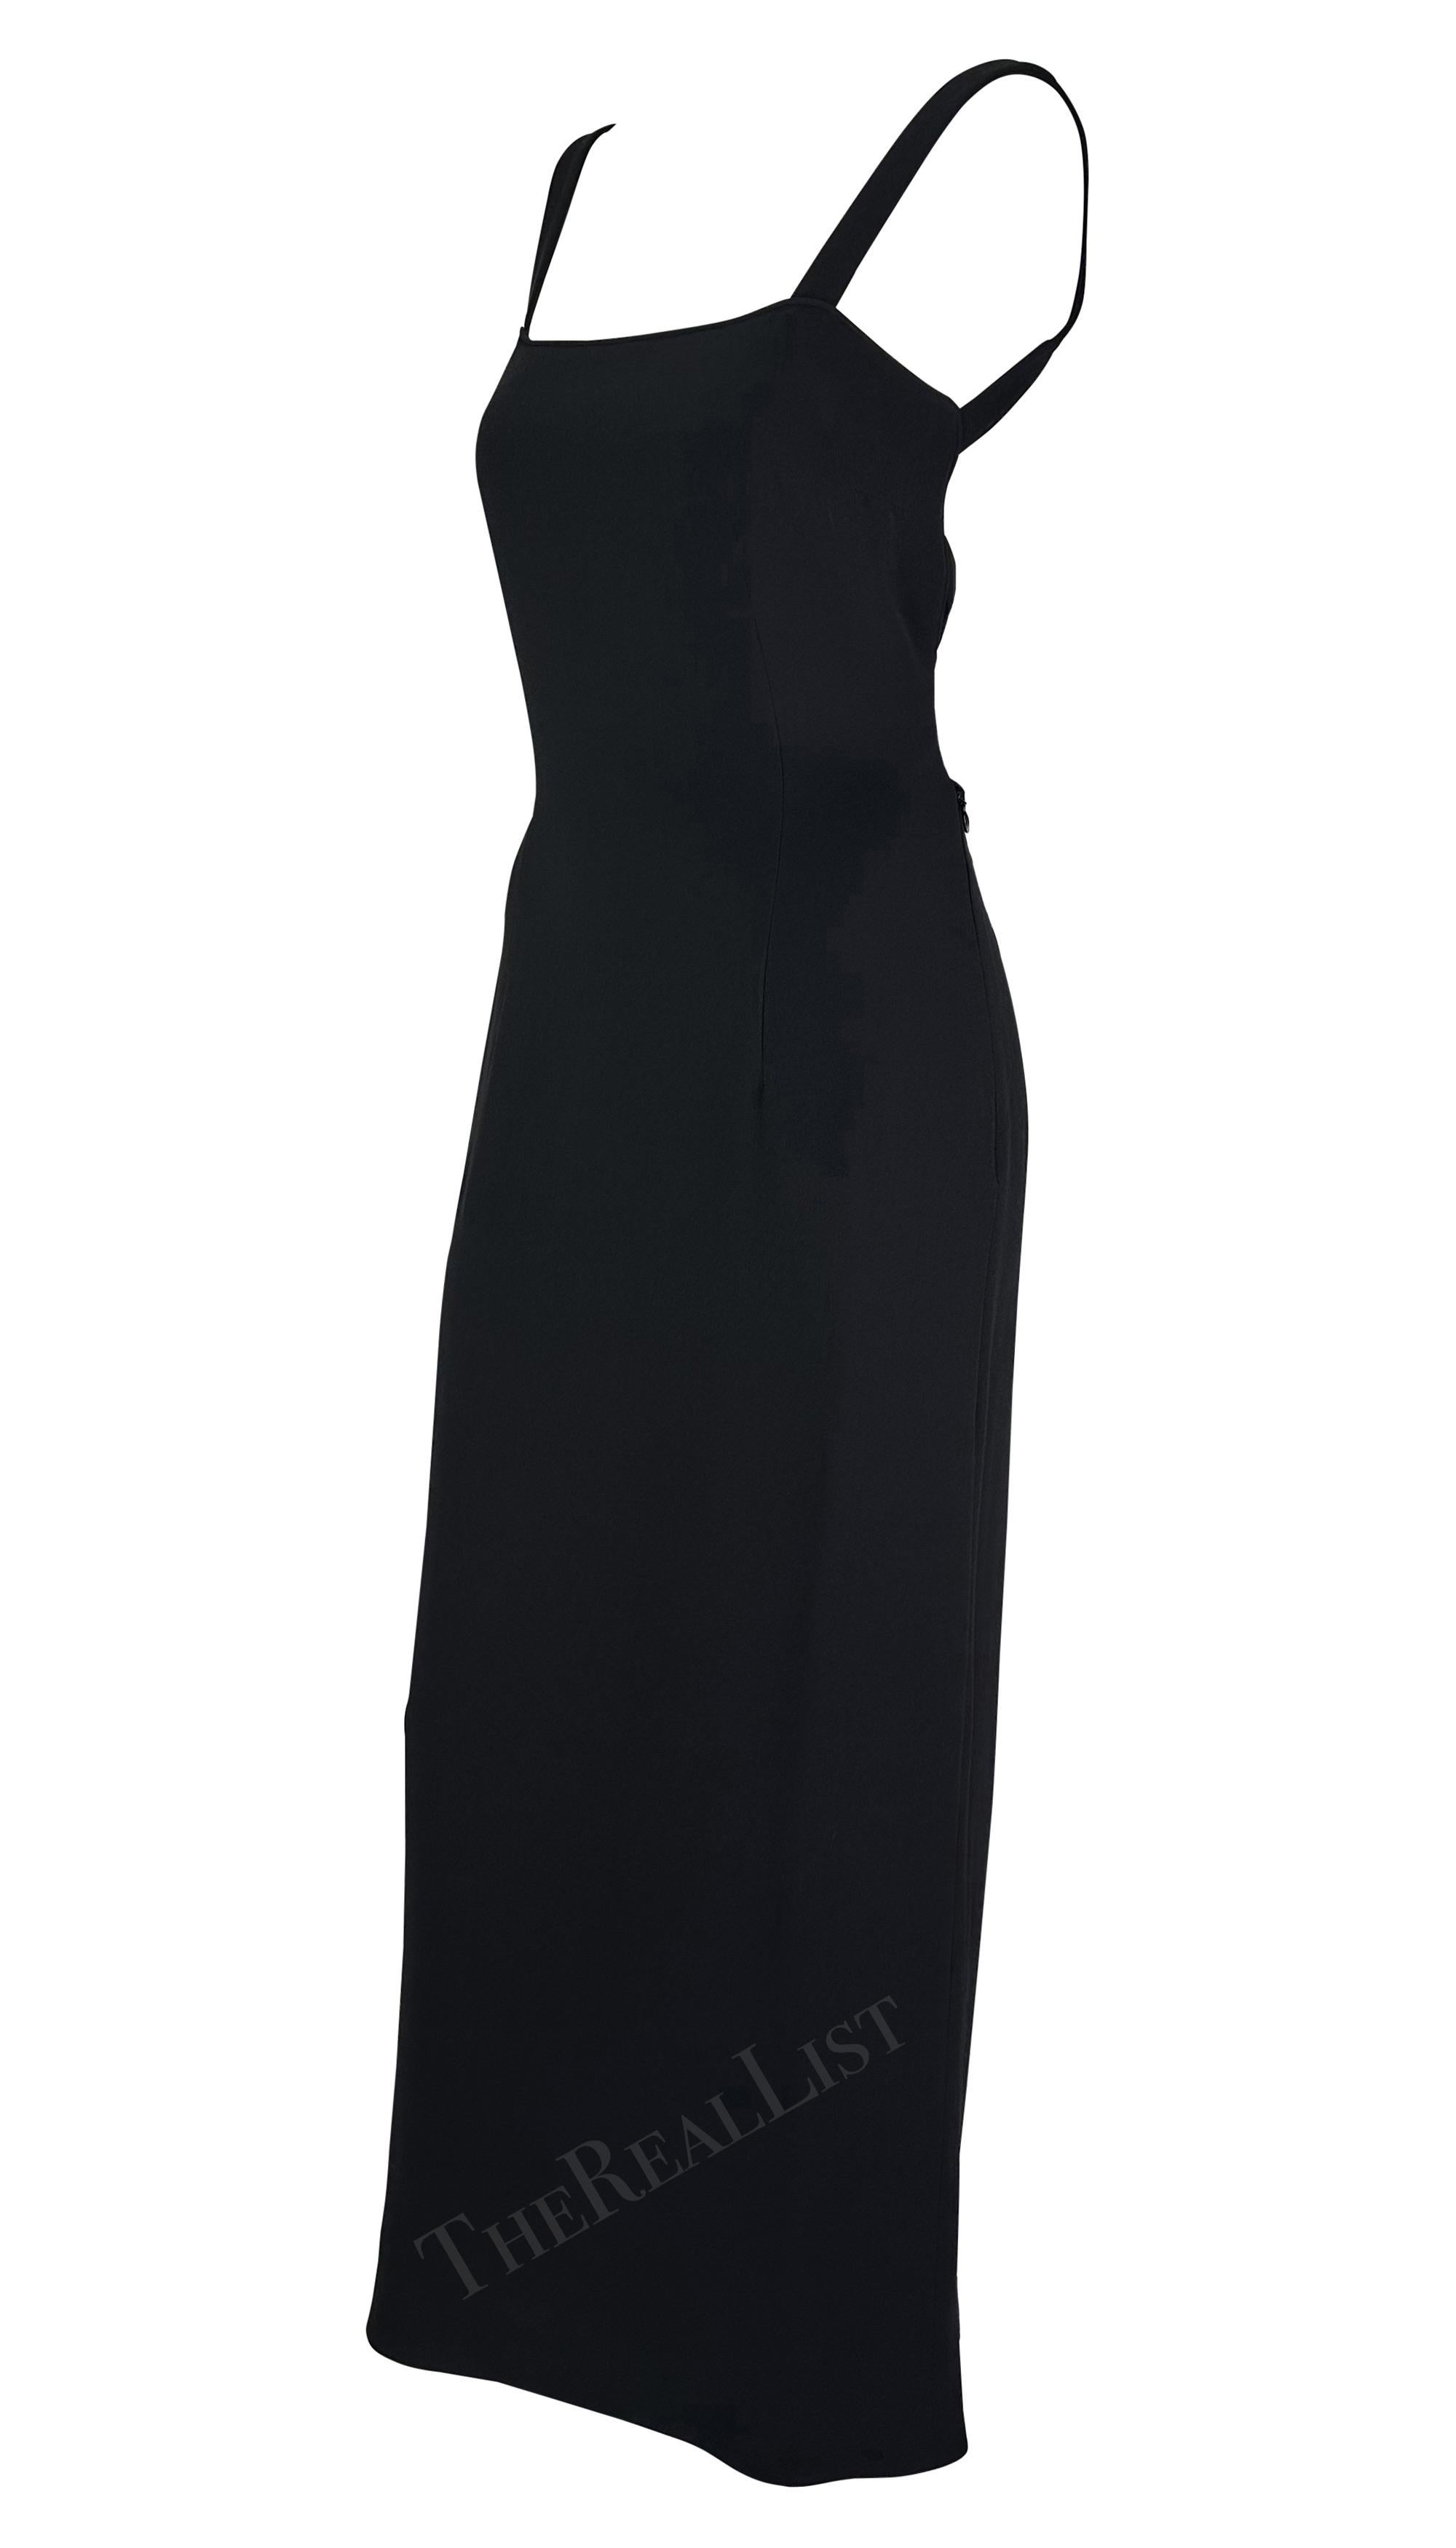 Late 1990s Giorgio Armani Black Backless Bodycon Stretch Strap Gown For Sale 1